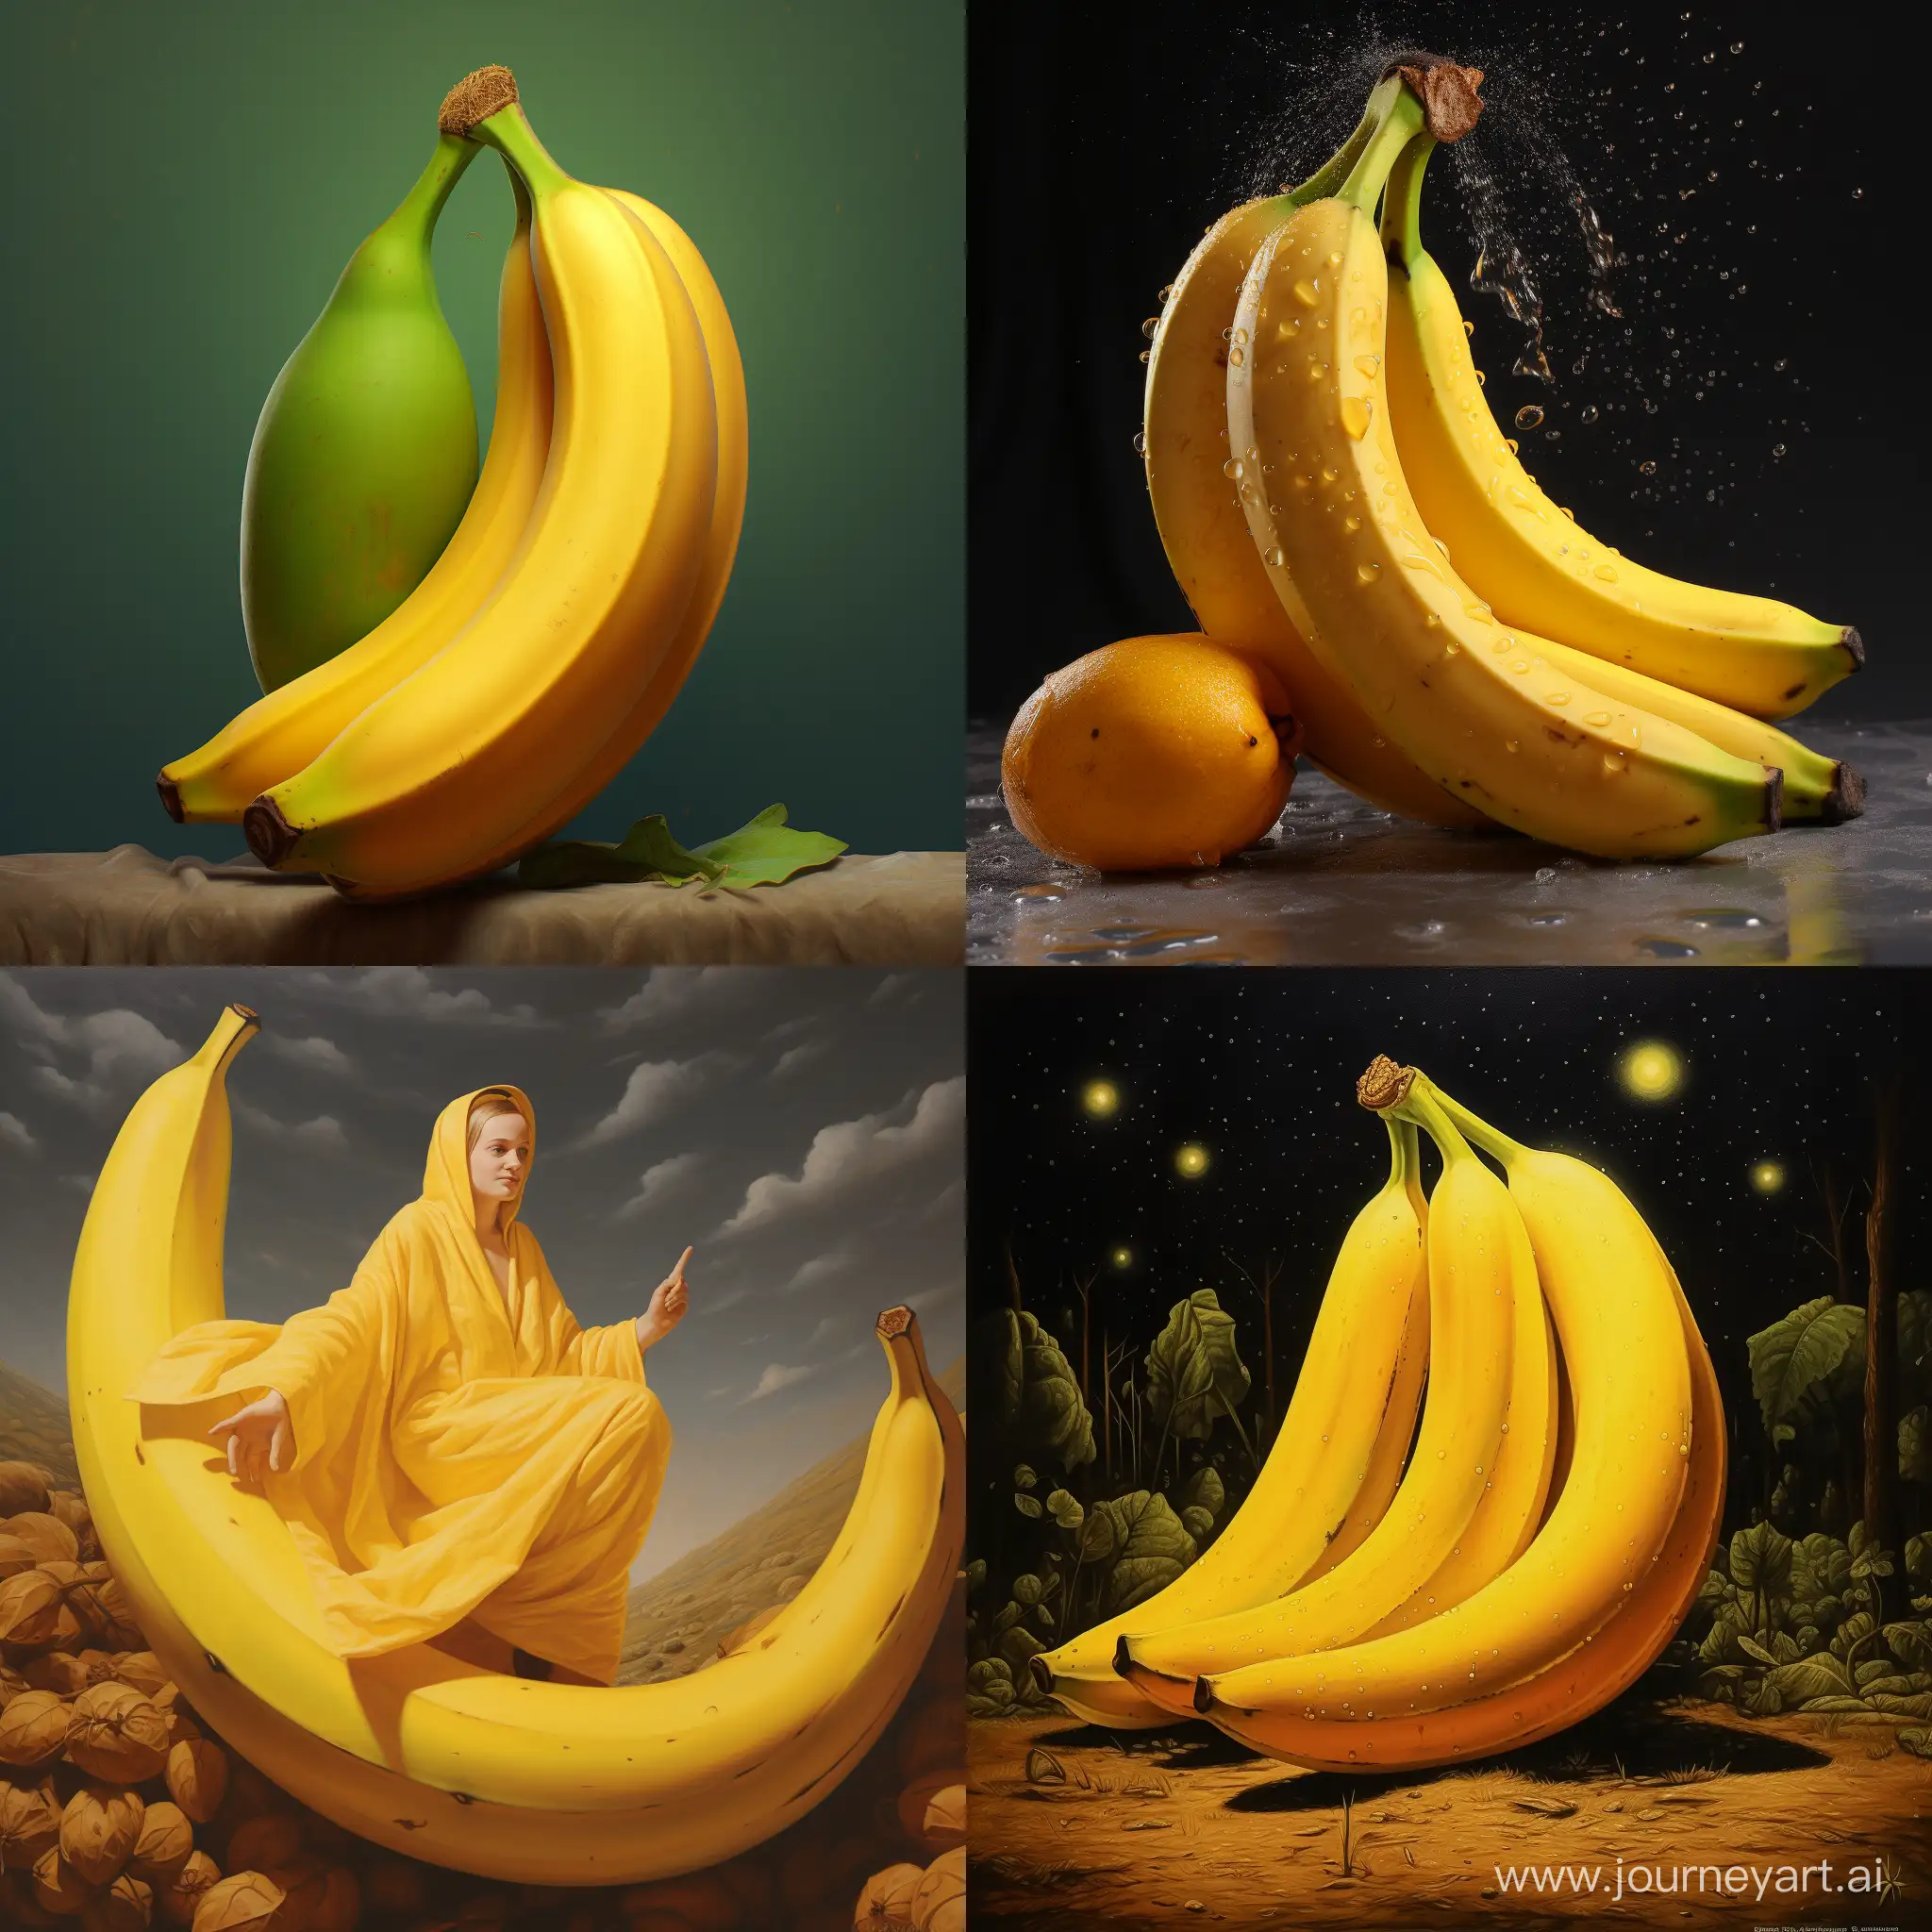 Vibrant-Banana-Art-with-AR-Touch-Creative-AI-Image